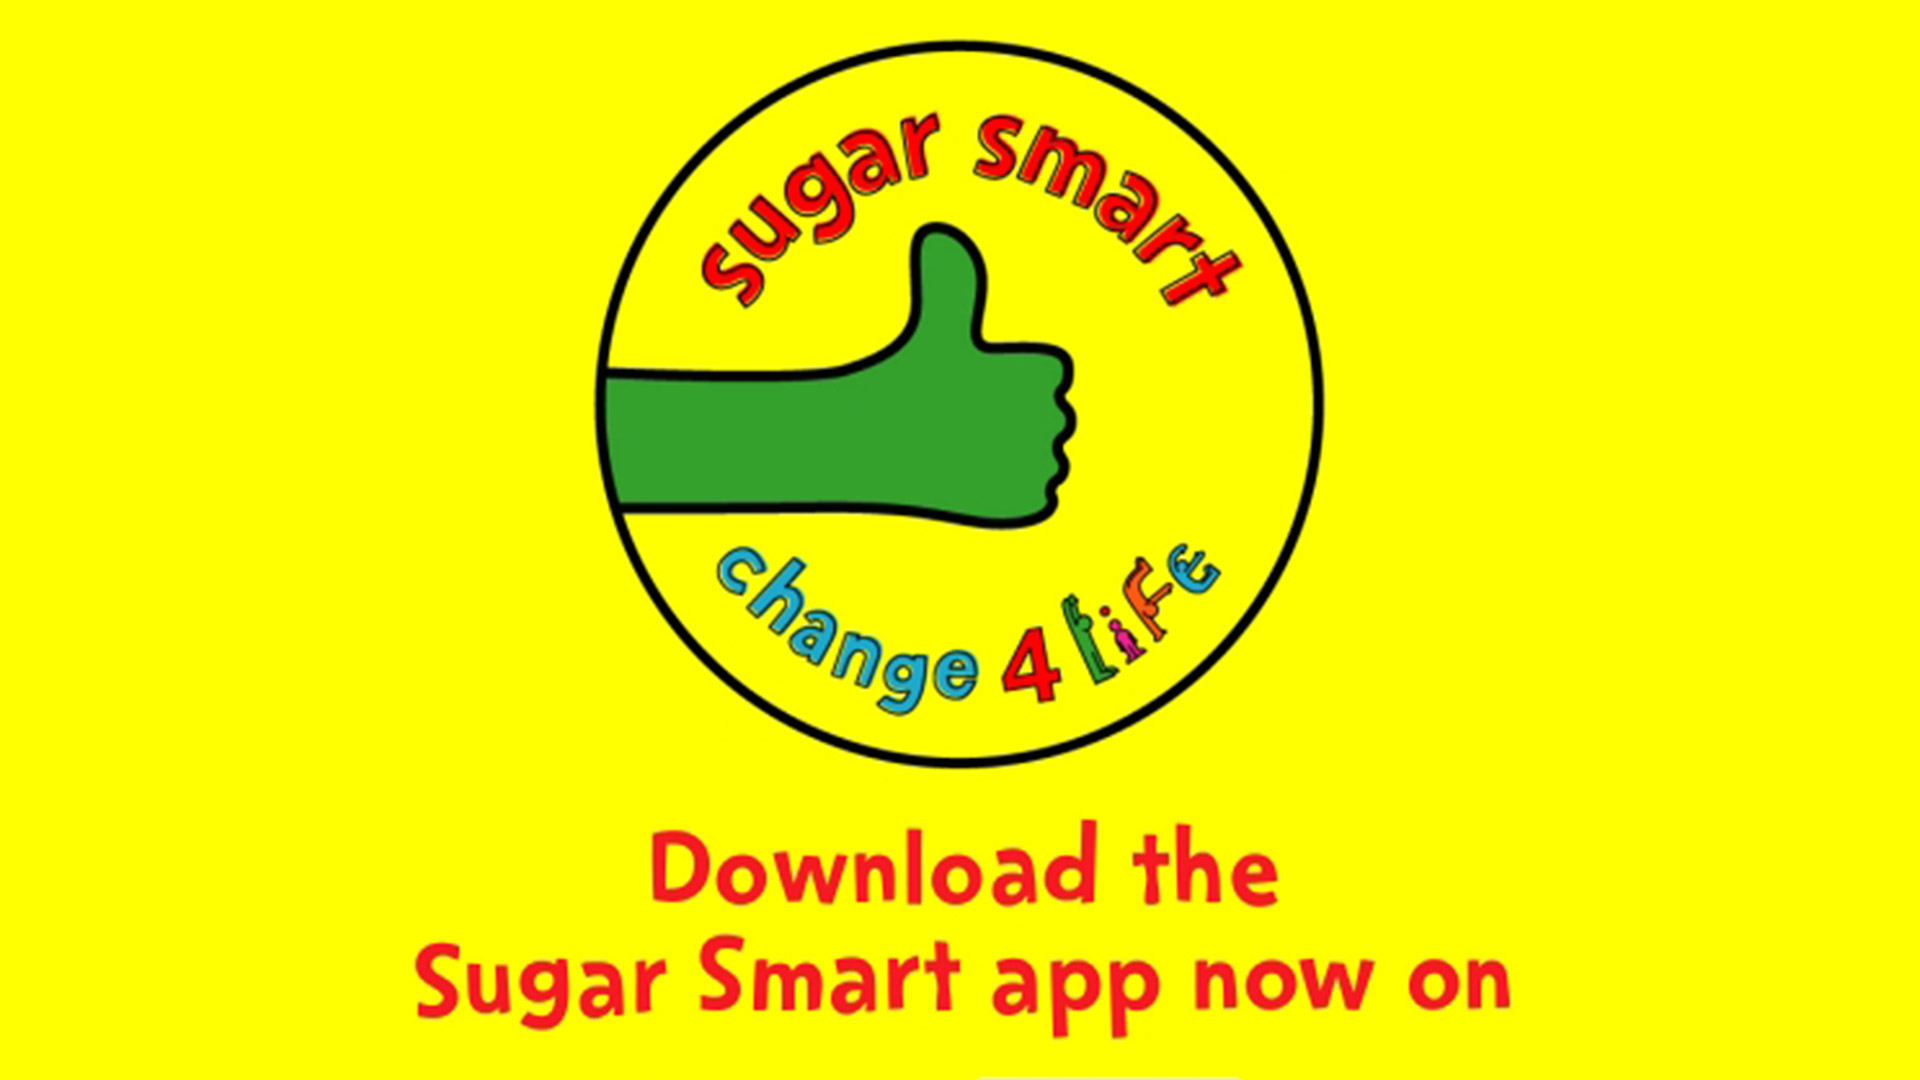 Public Health England - Change 4 Life - Sugar Smart